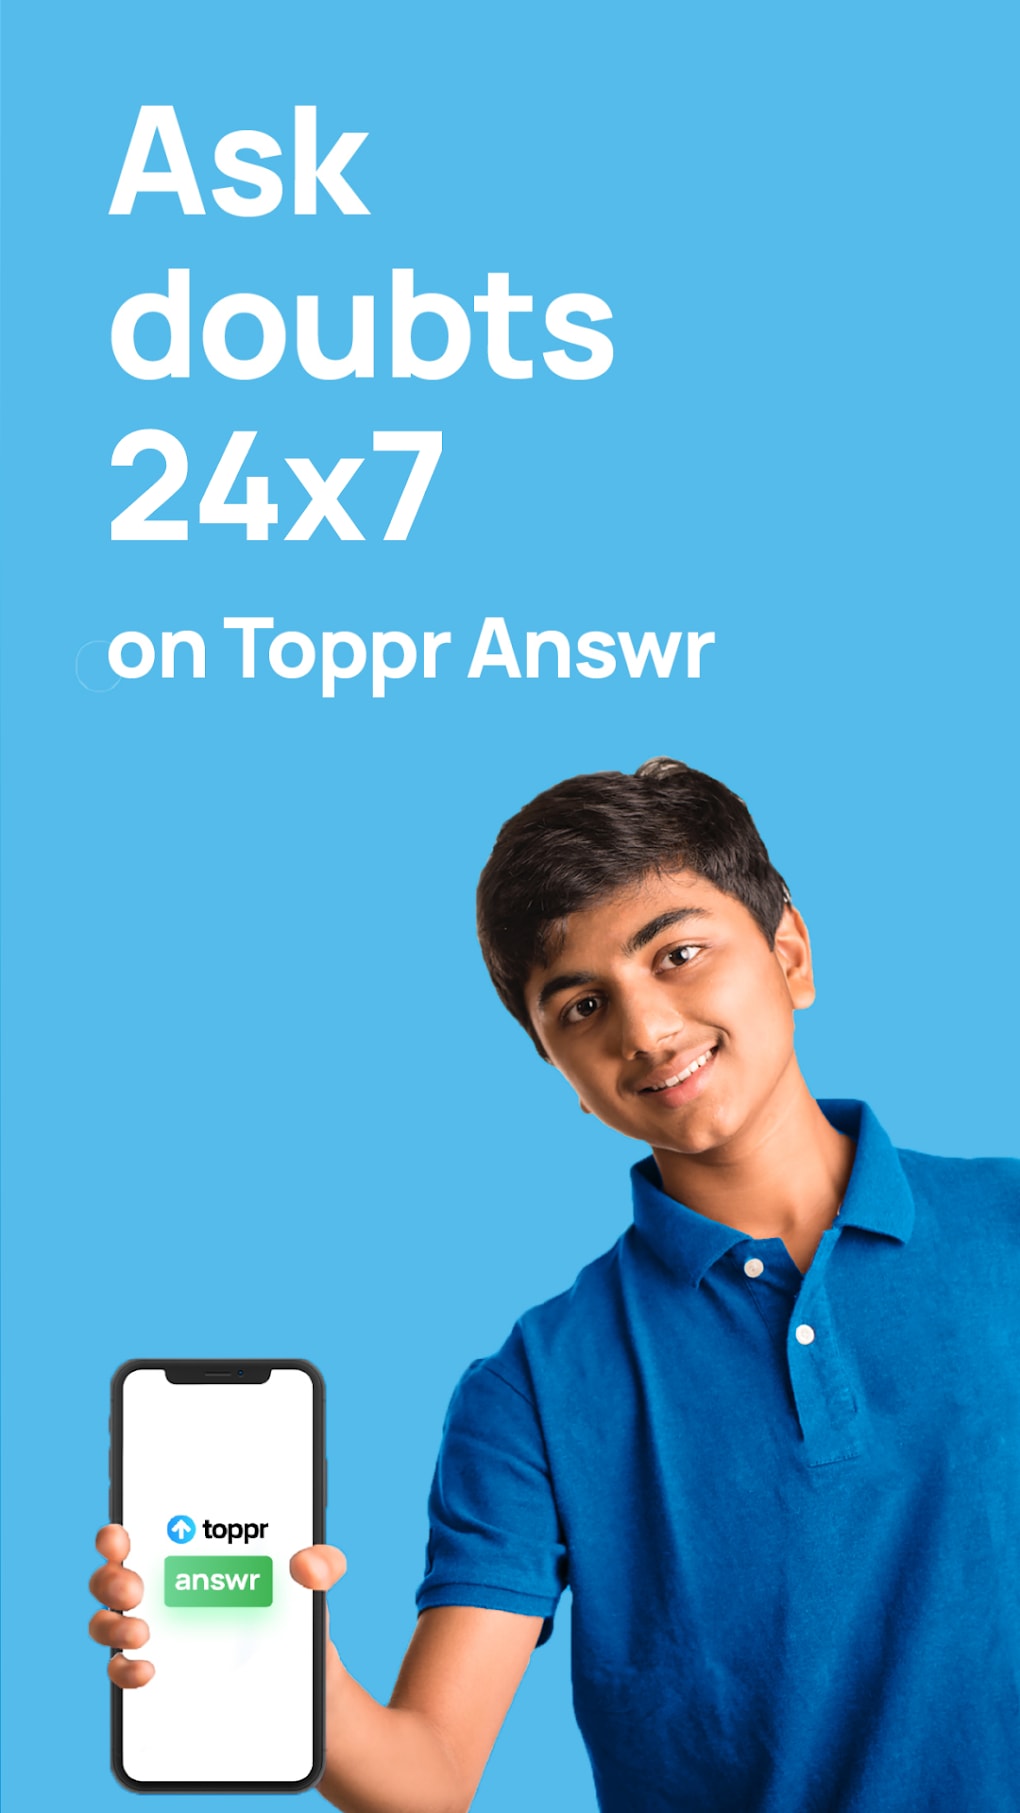 homework help app scan question get answer download